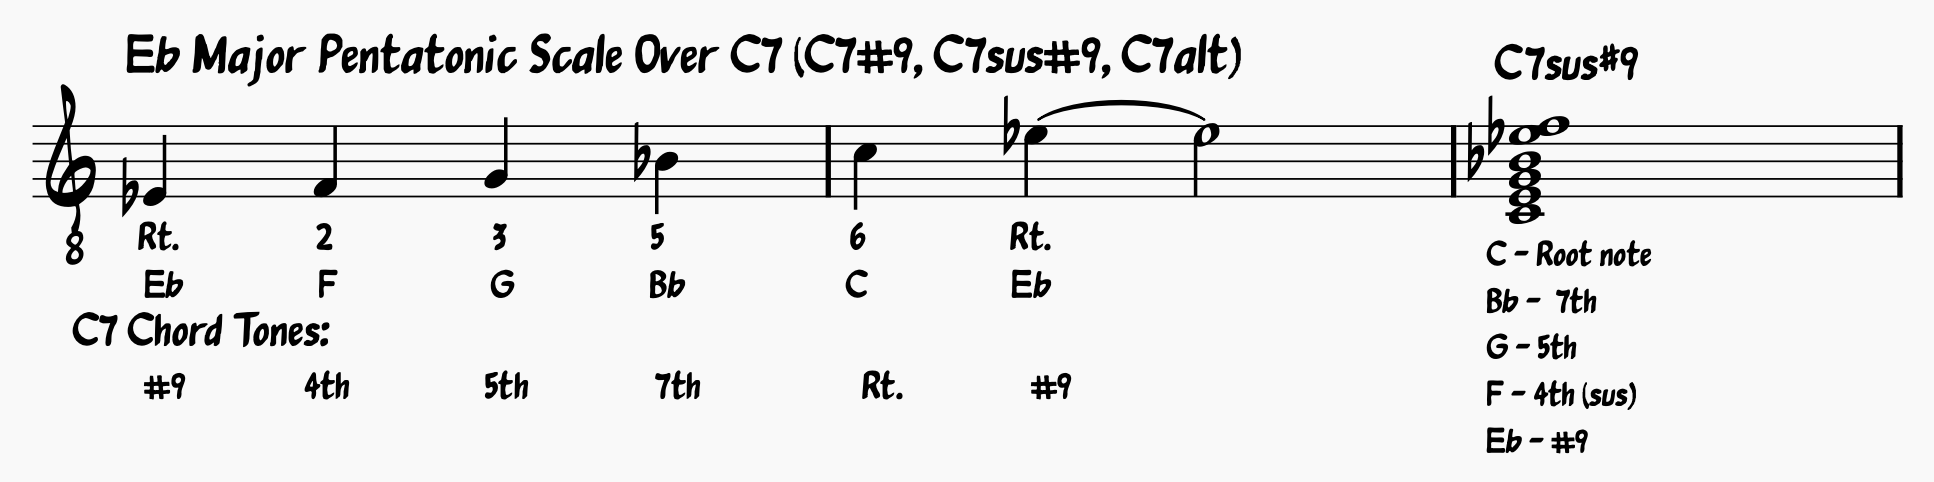 Blues Scale Guide: Eb Major Pentatonic Scale over or C minor pentatonic ccale over C7, C9, C13, C7sus Chords